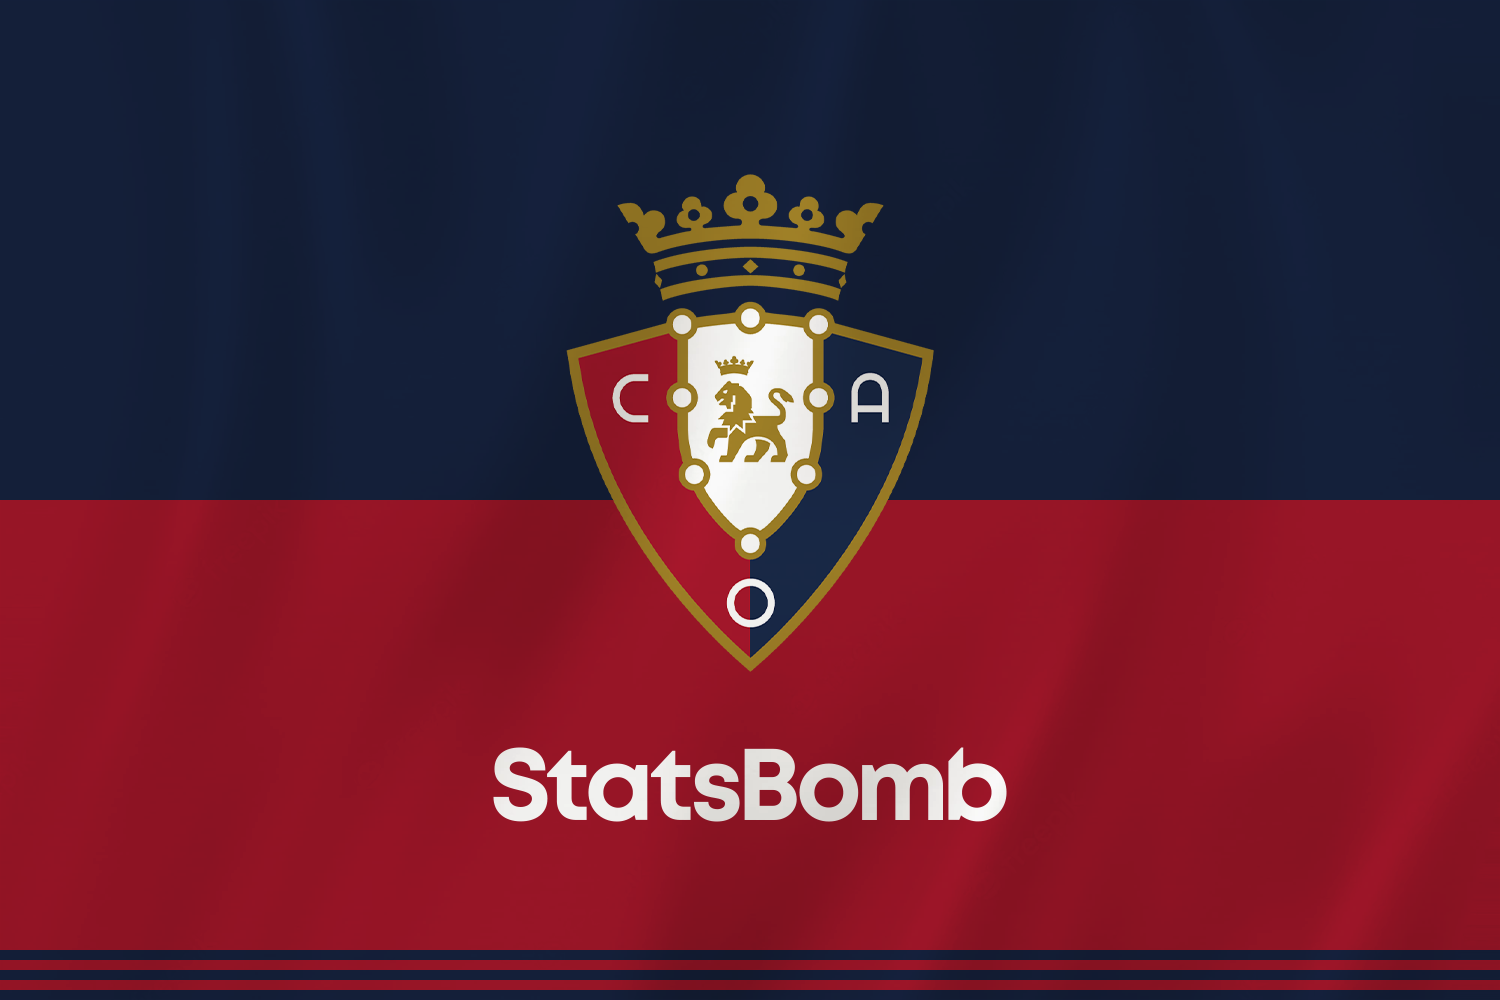 StatsBomb Expand Spanish Presence with CA Osasuna Partnership